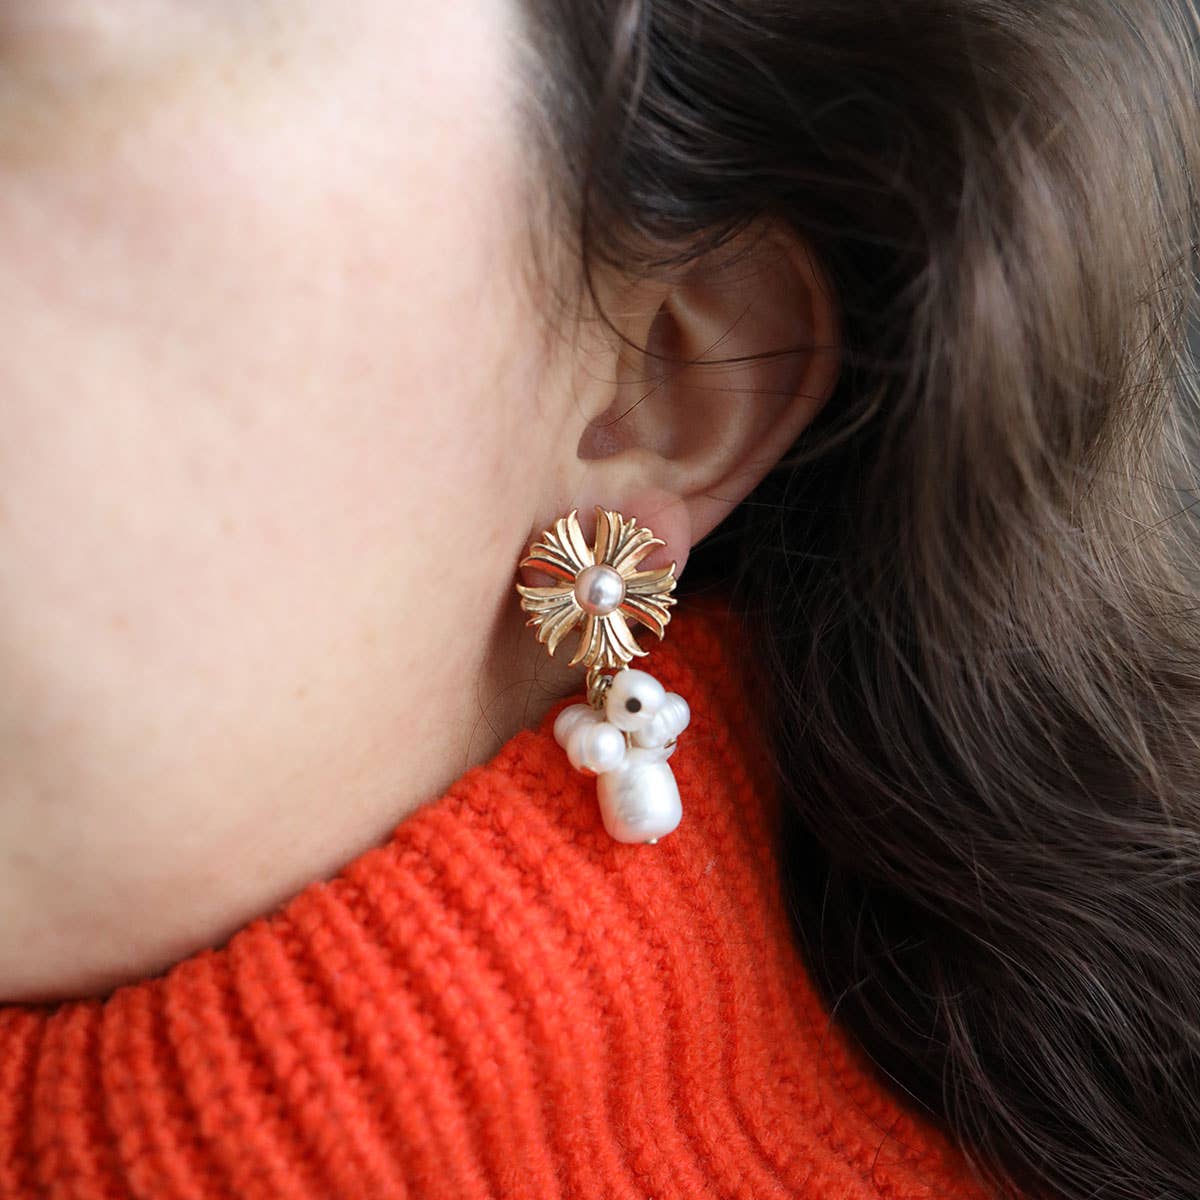 Holland Flower & Pearl Cluster Drop Earrings in Ivory